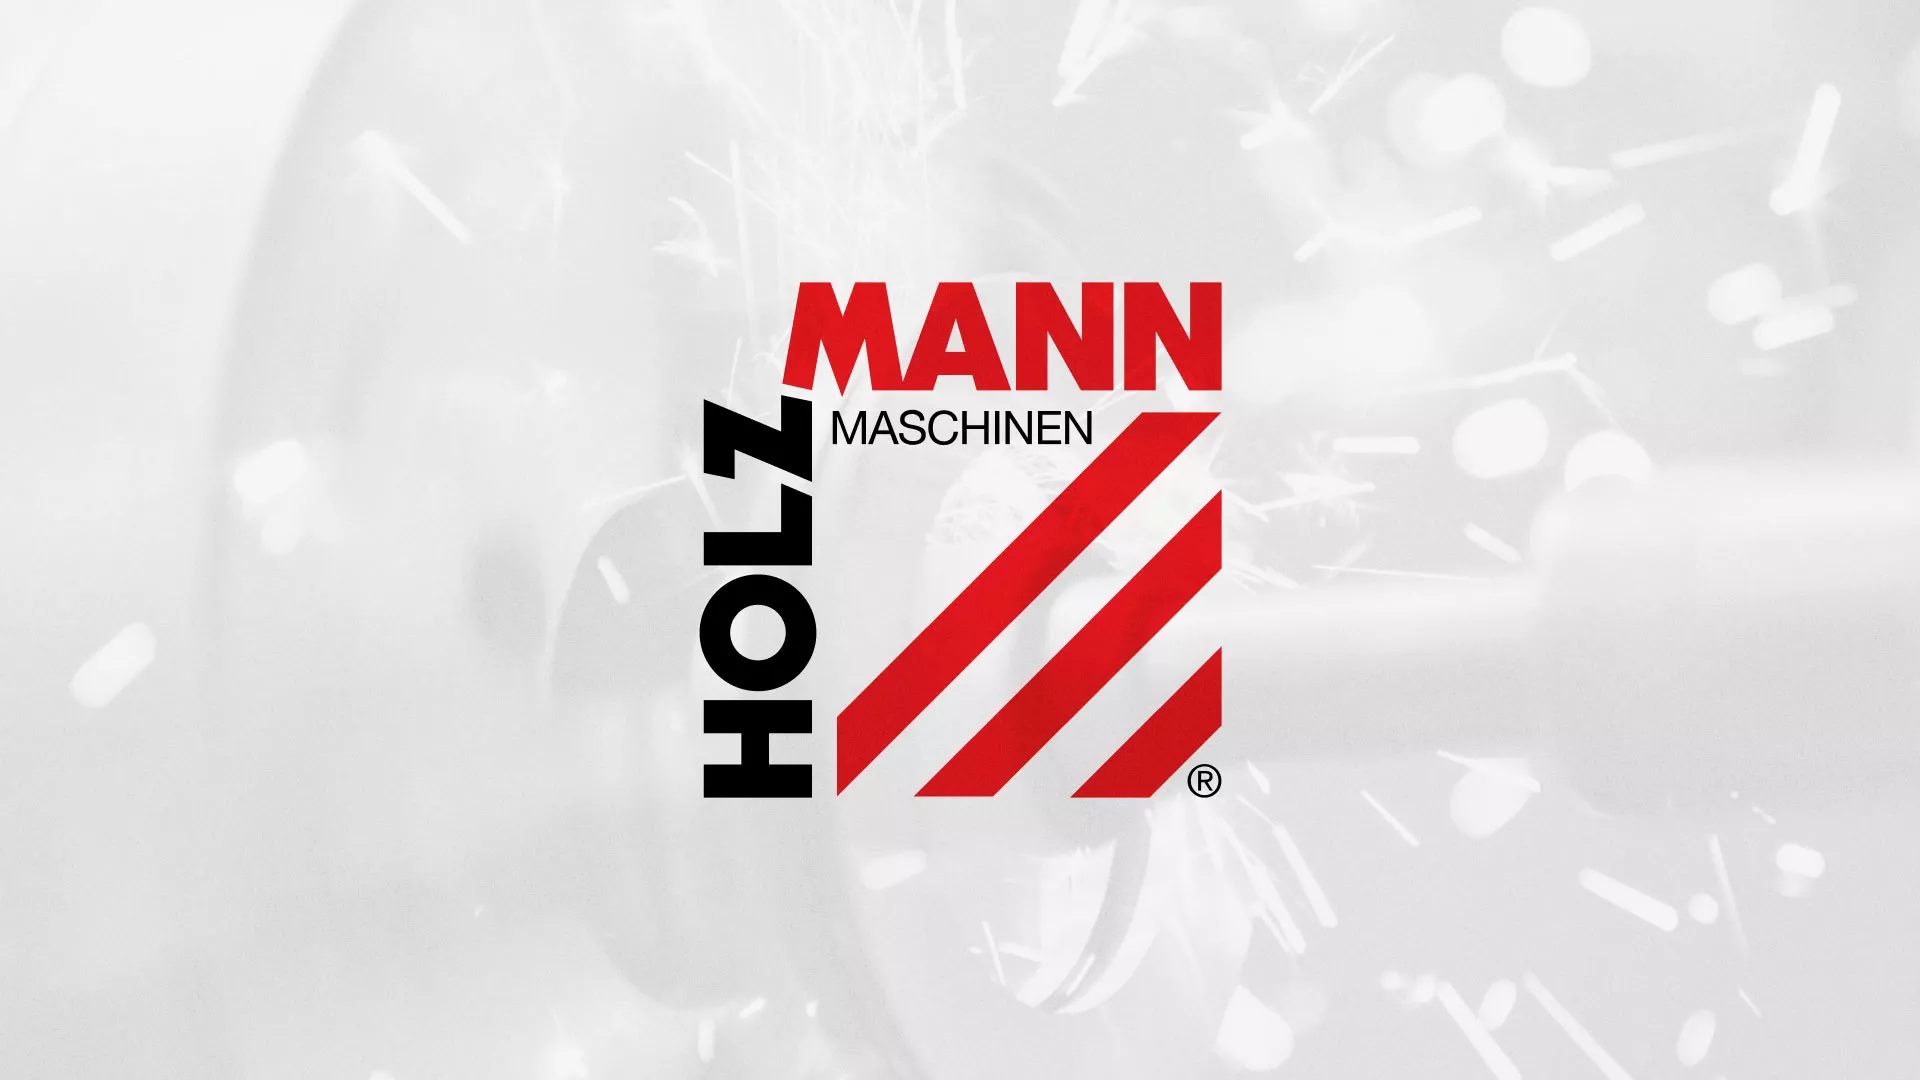 Создание сайта компании «HOLZMANN Maschinen GmbH» в Мценске